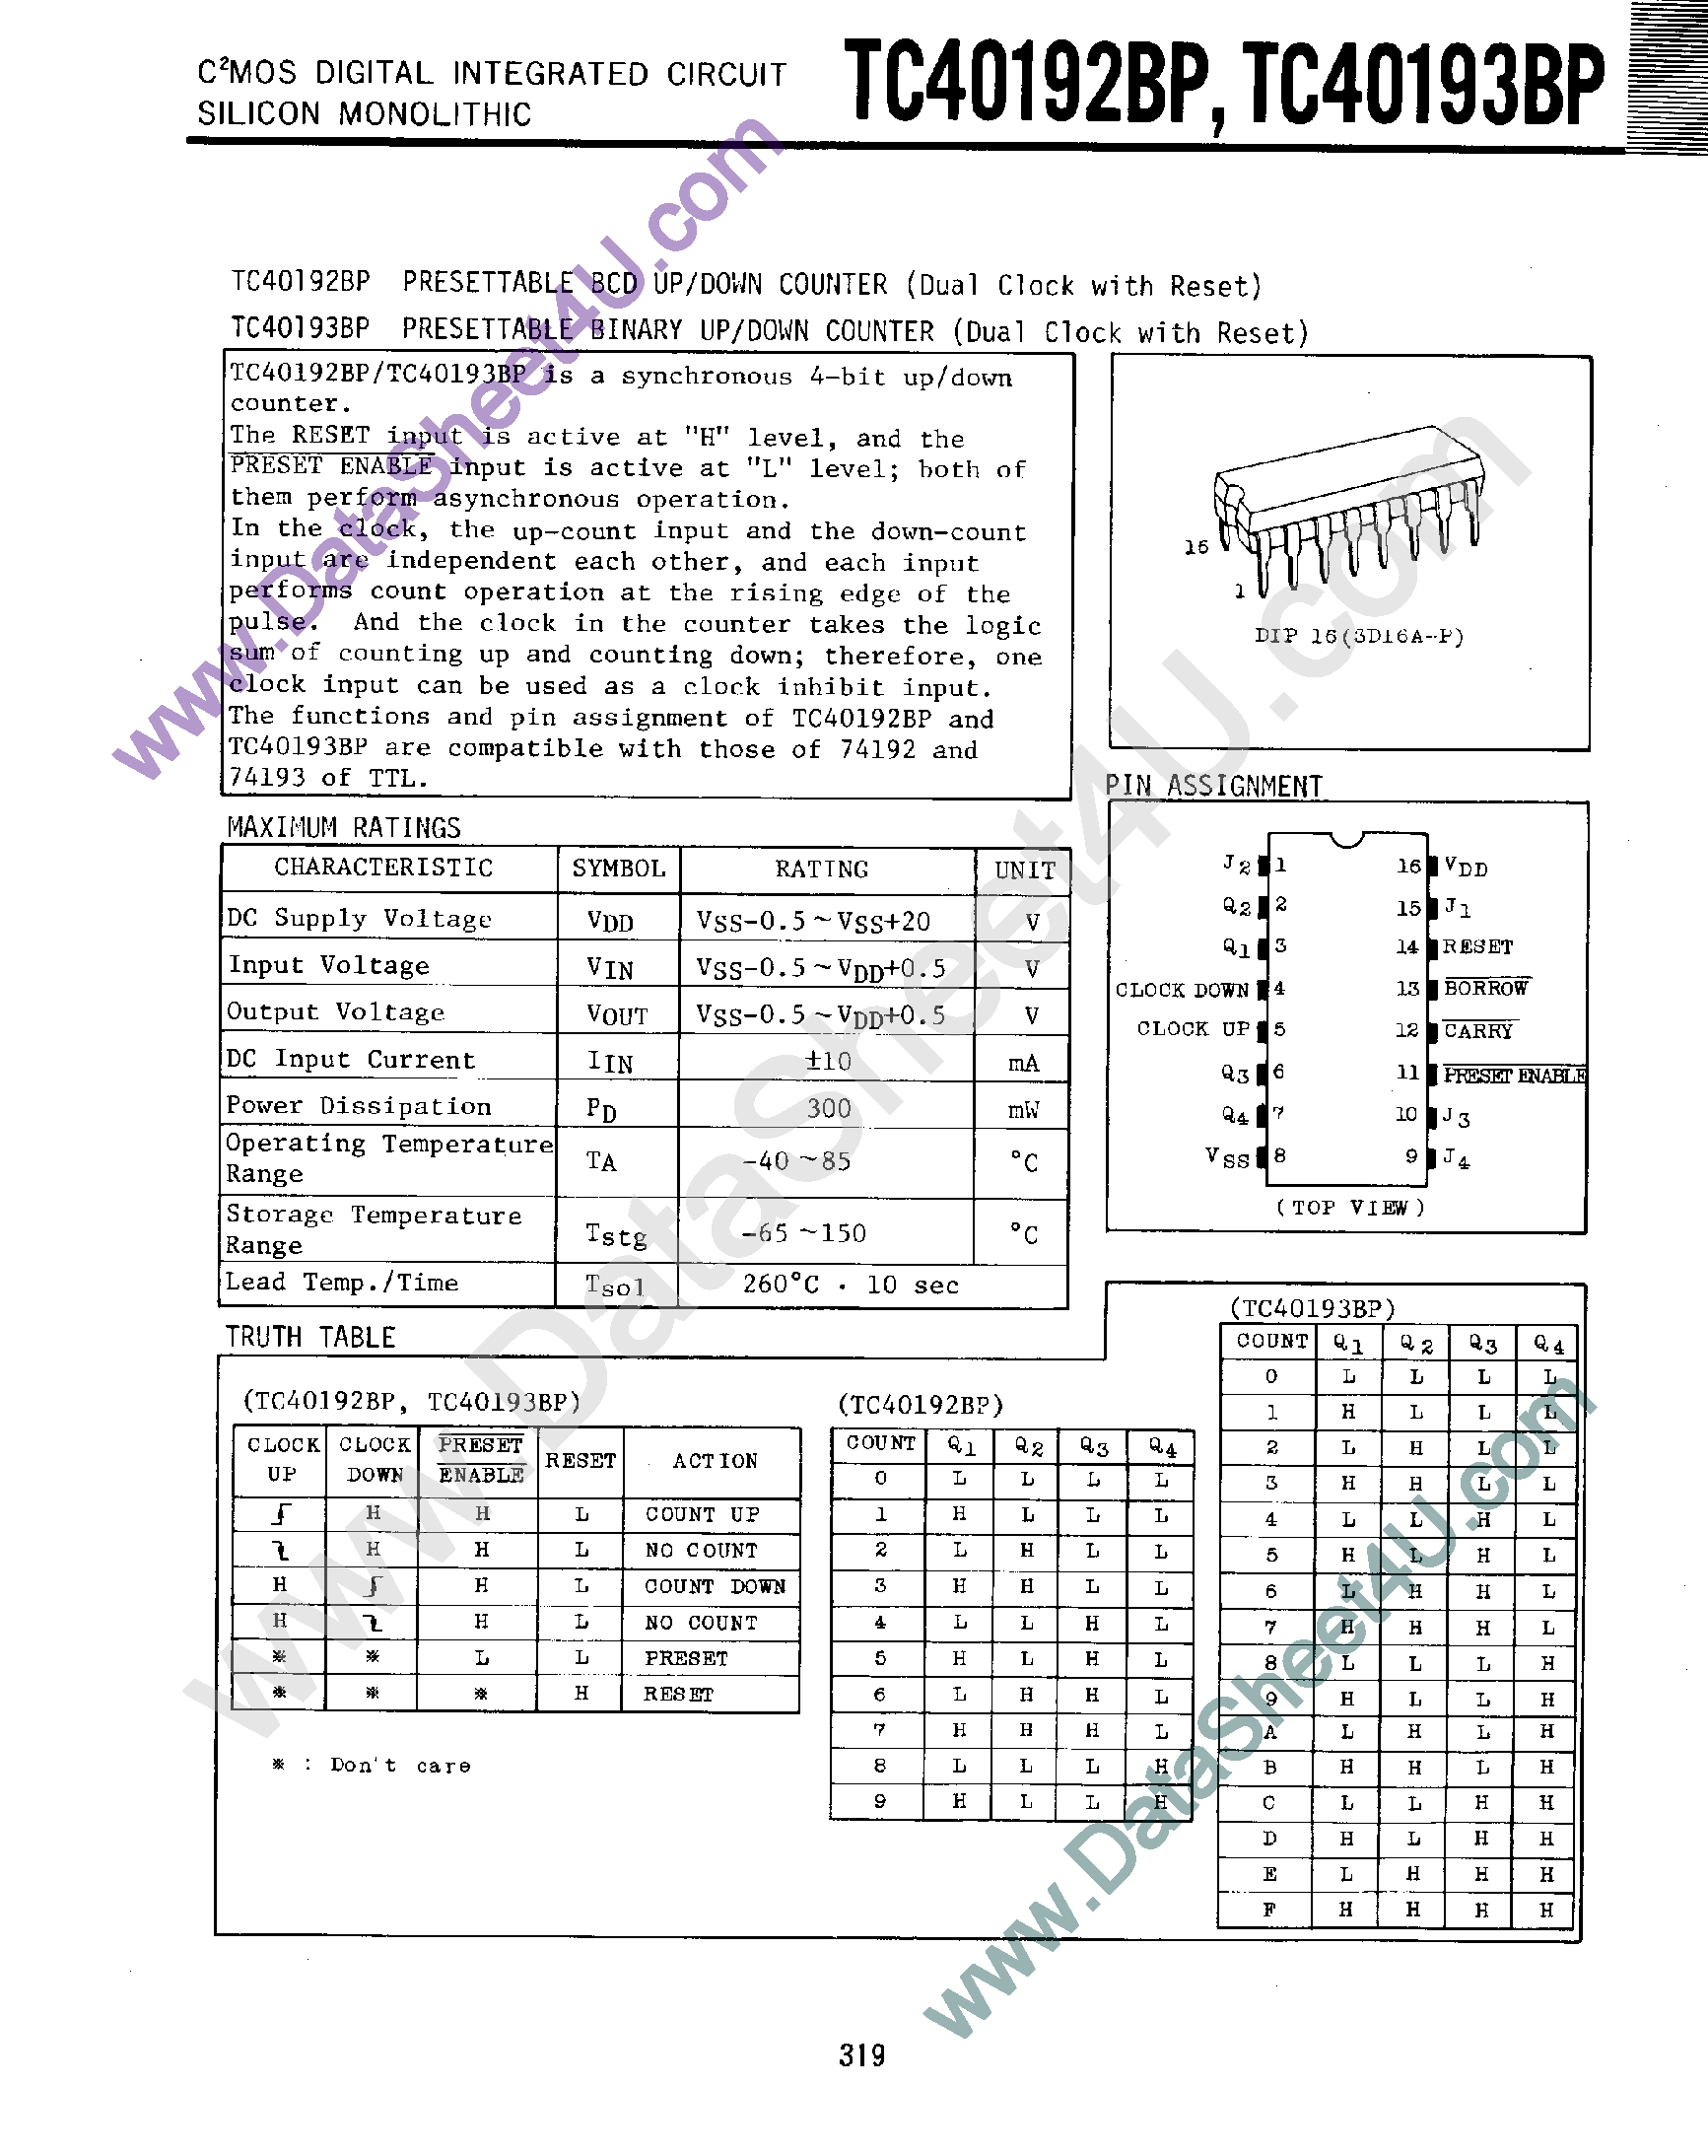 Datasheet TC40192BP - (TC40192BP / TC40193BP) Presettable Up/Down Counter page 1